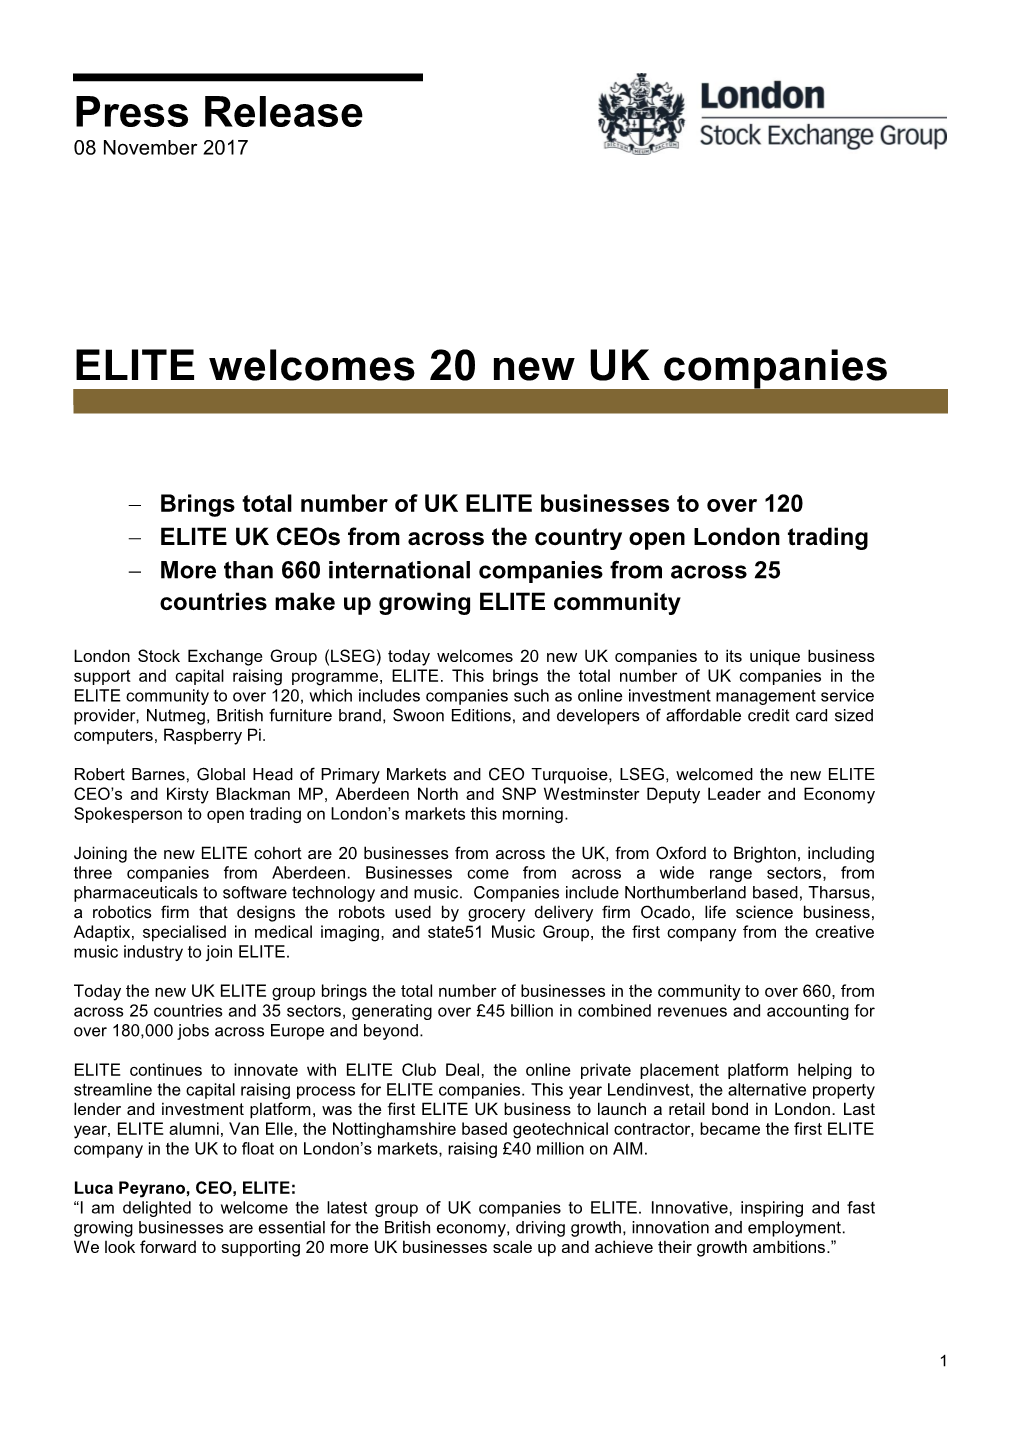 ELITE Welcomes 20 New UK Companies